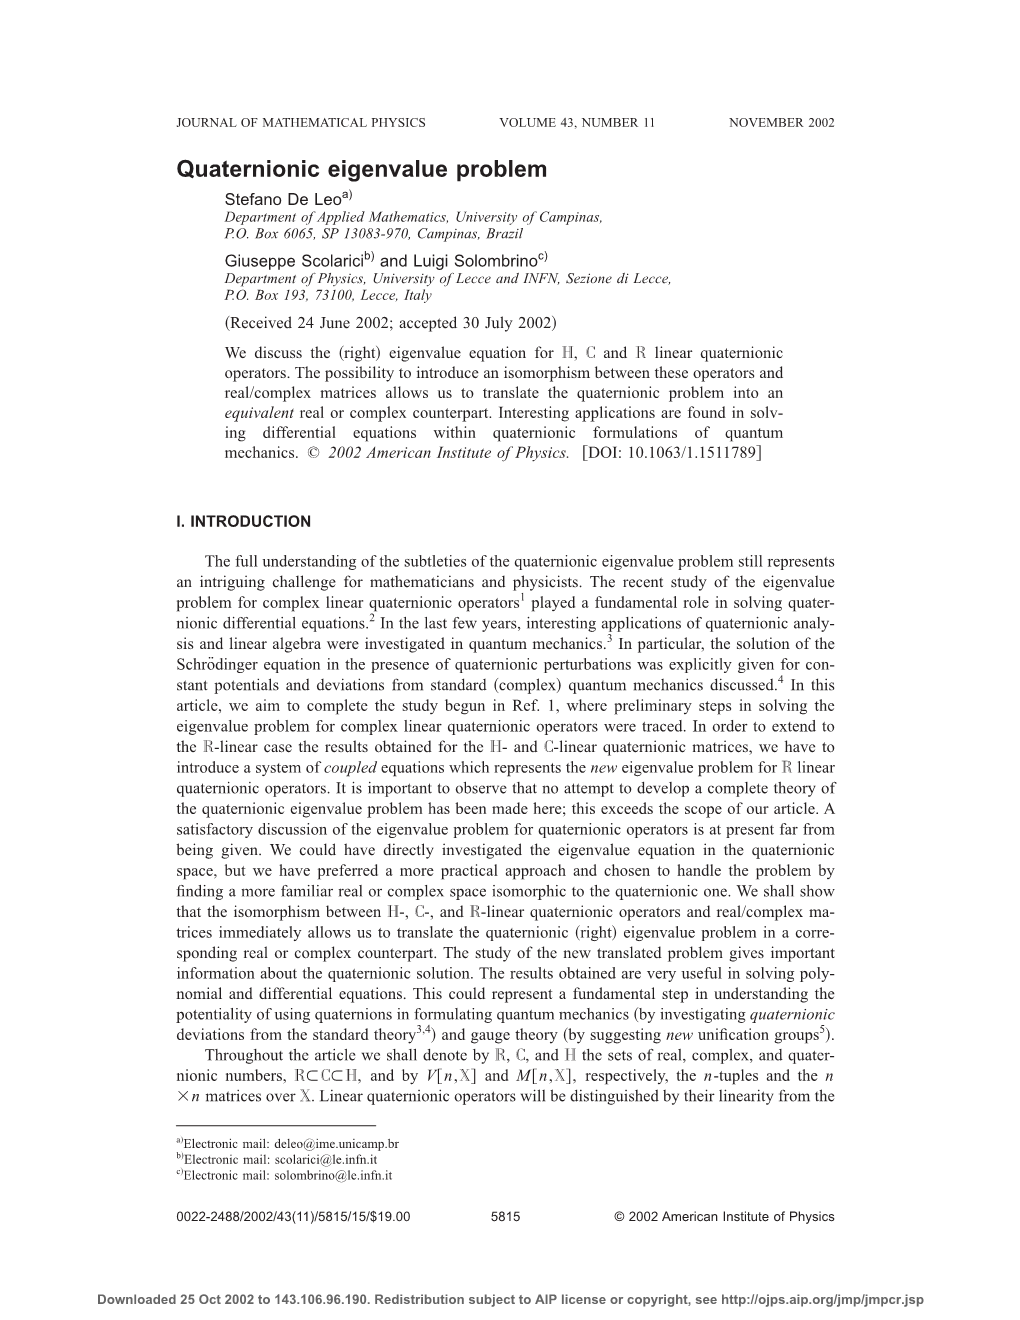 Quaternionic Eigenvalue Problem Stefano De Leoa) Department of Applied Mathematics, University of Campinas, P.O